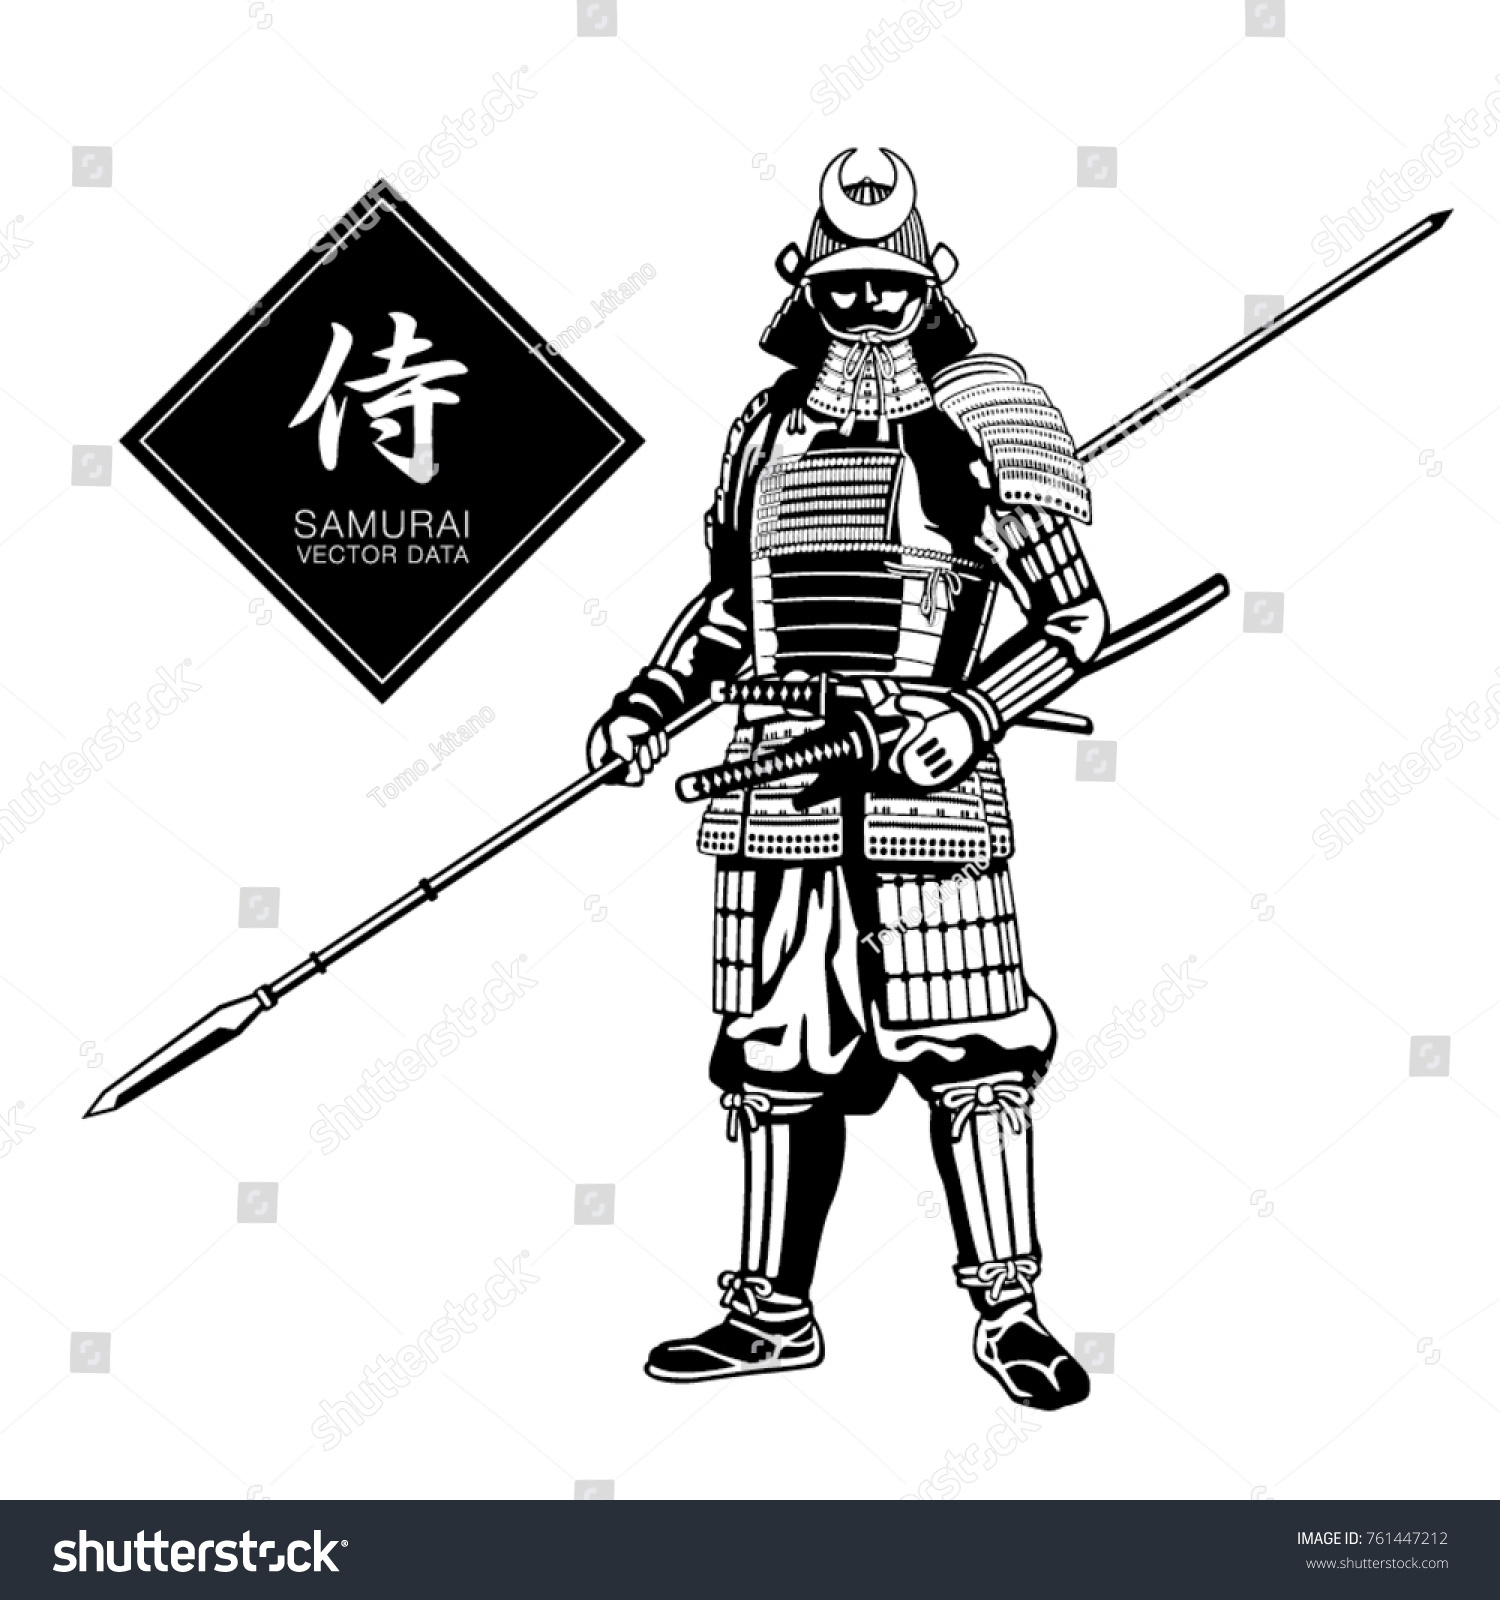 Samurai Warrior Japanese Illustration Vector Graphics Stock Vector Royalty Free